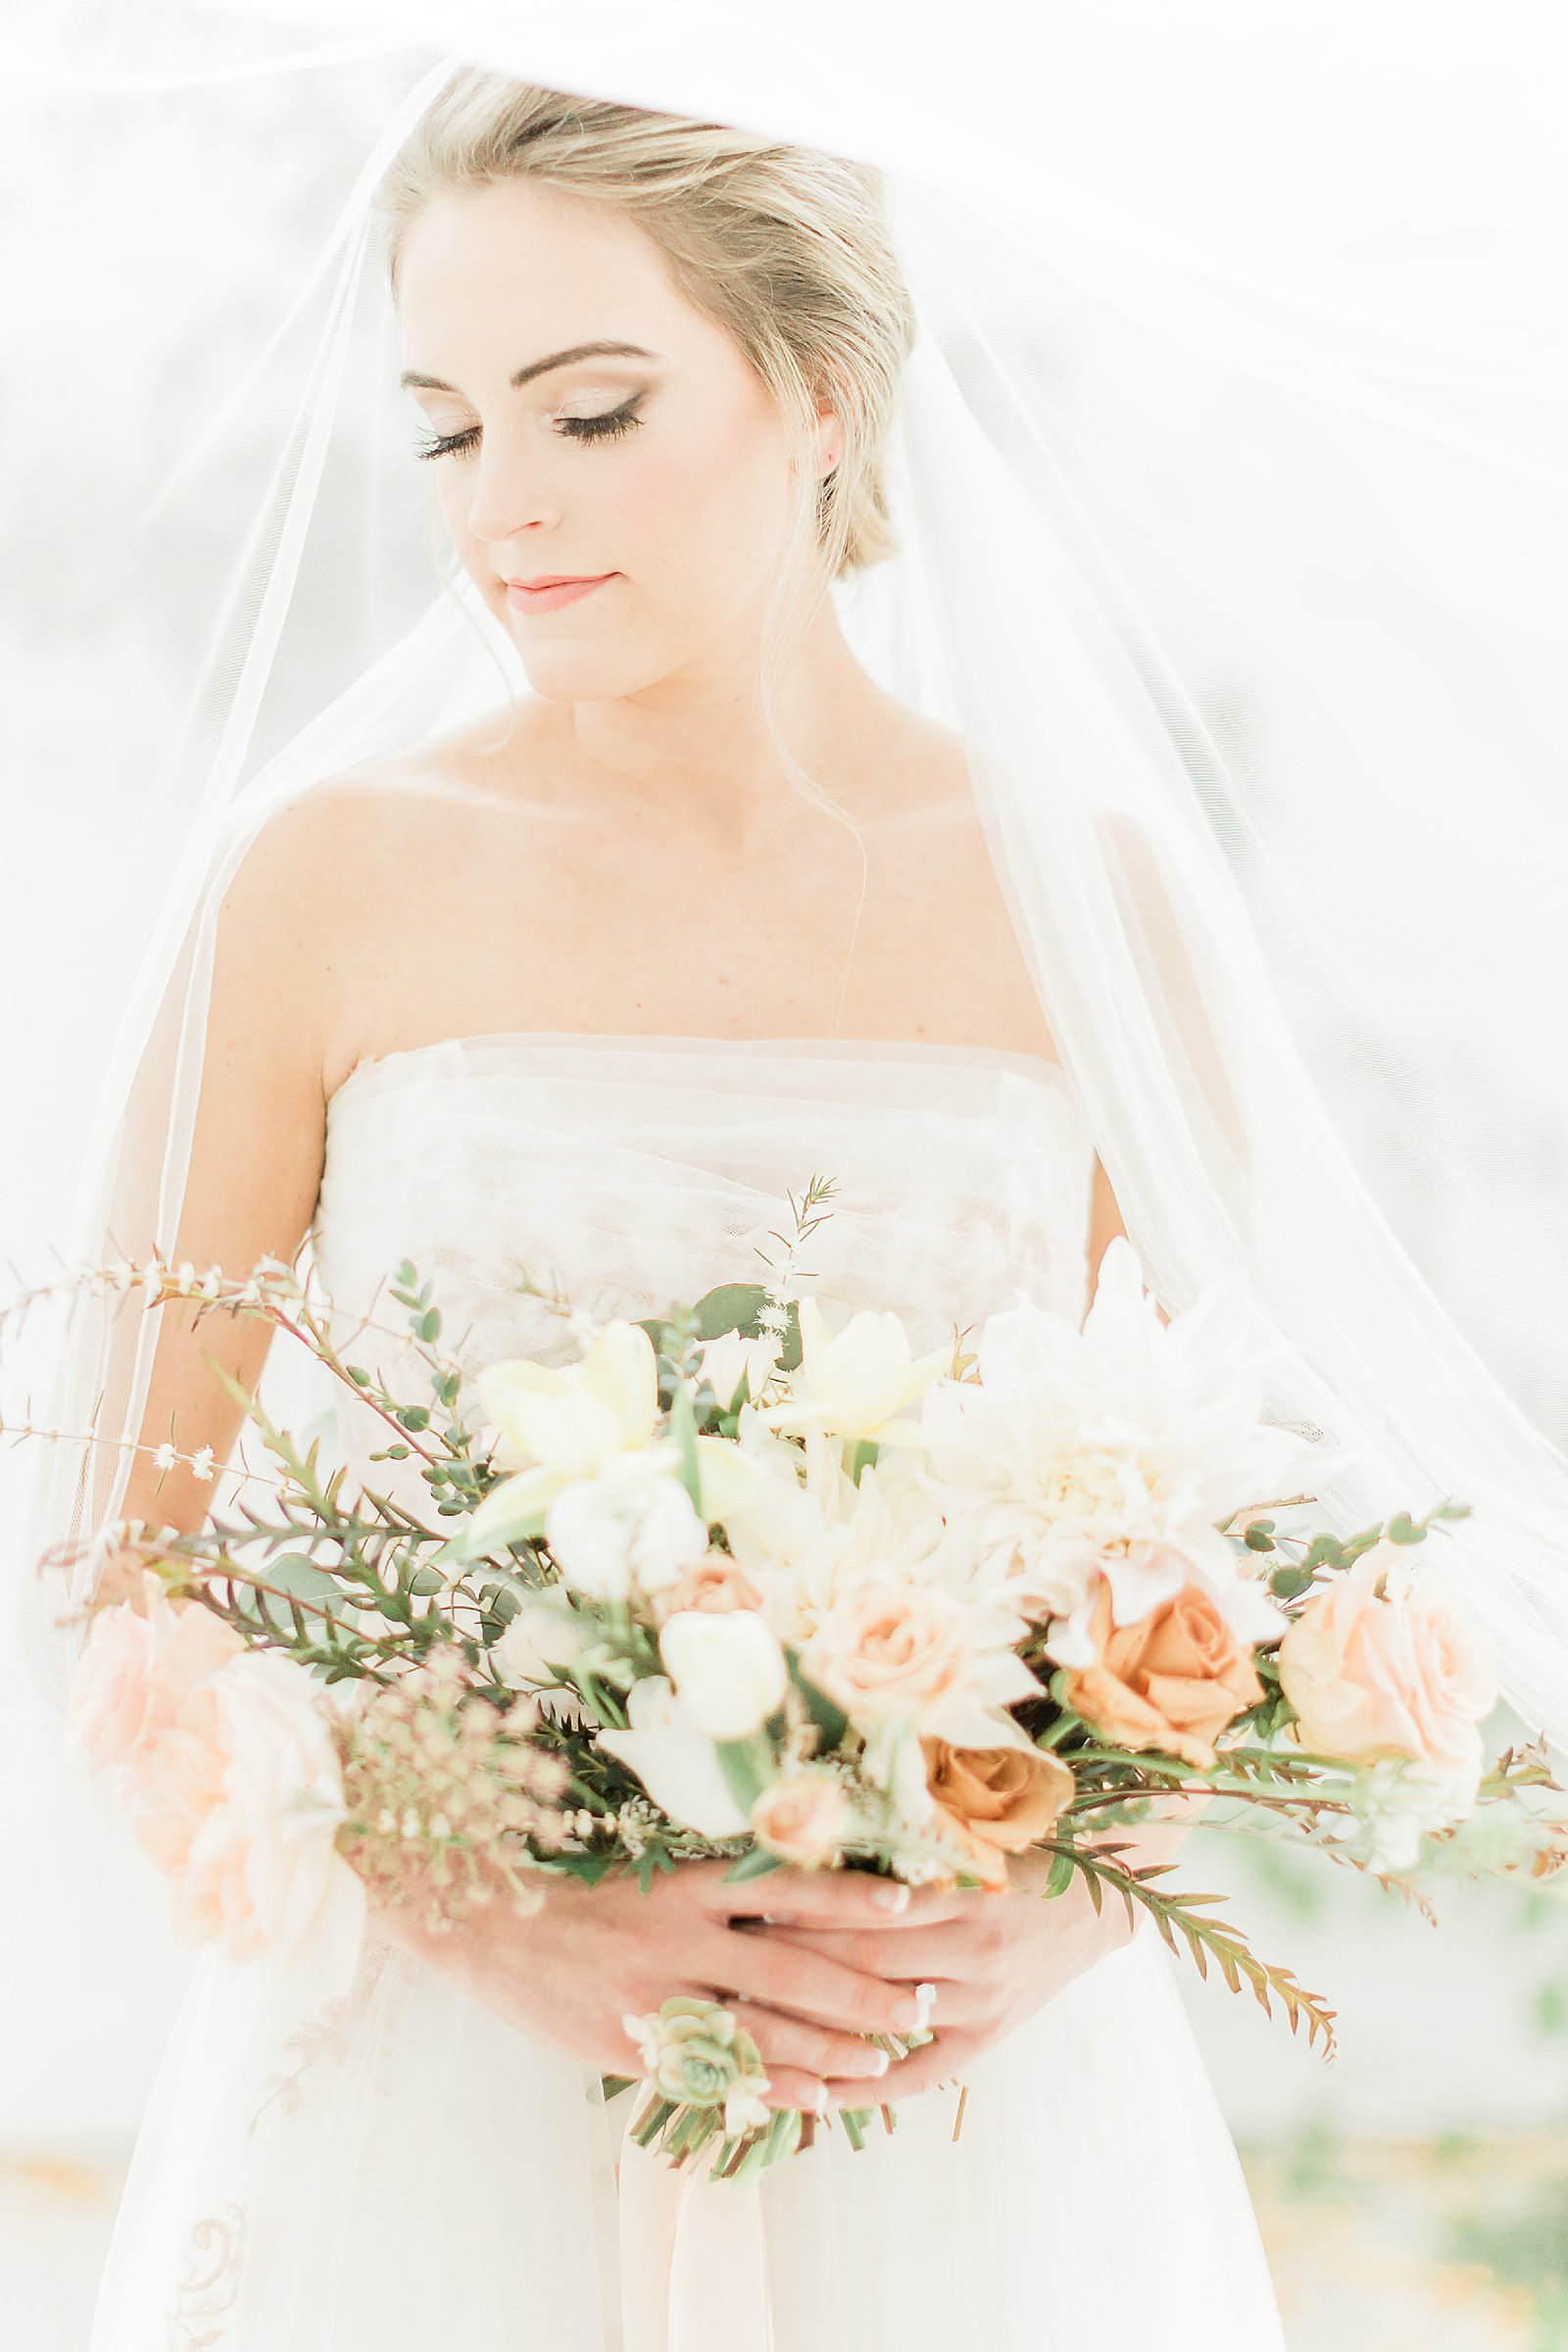 Bride With Veil, The Nest, Dallas,, Anna Kay Photography, San Antonio Wedding Photographer